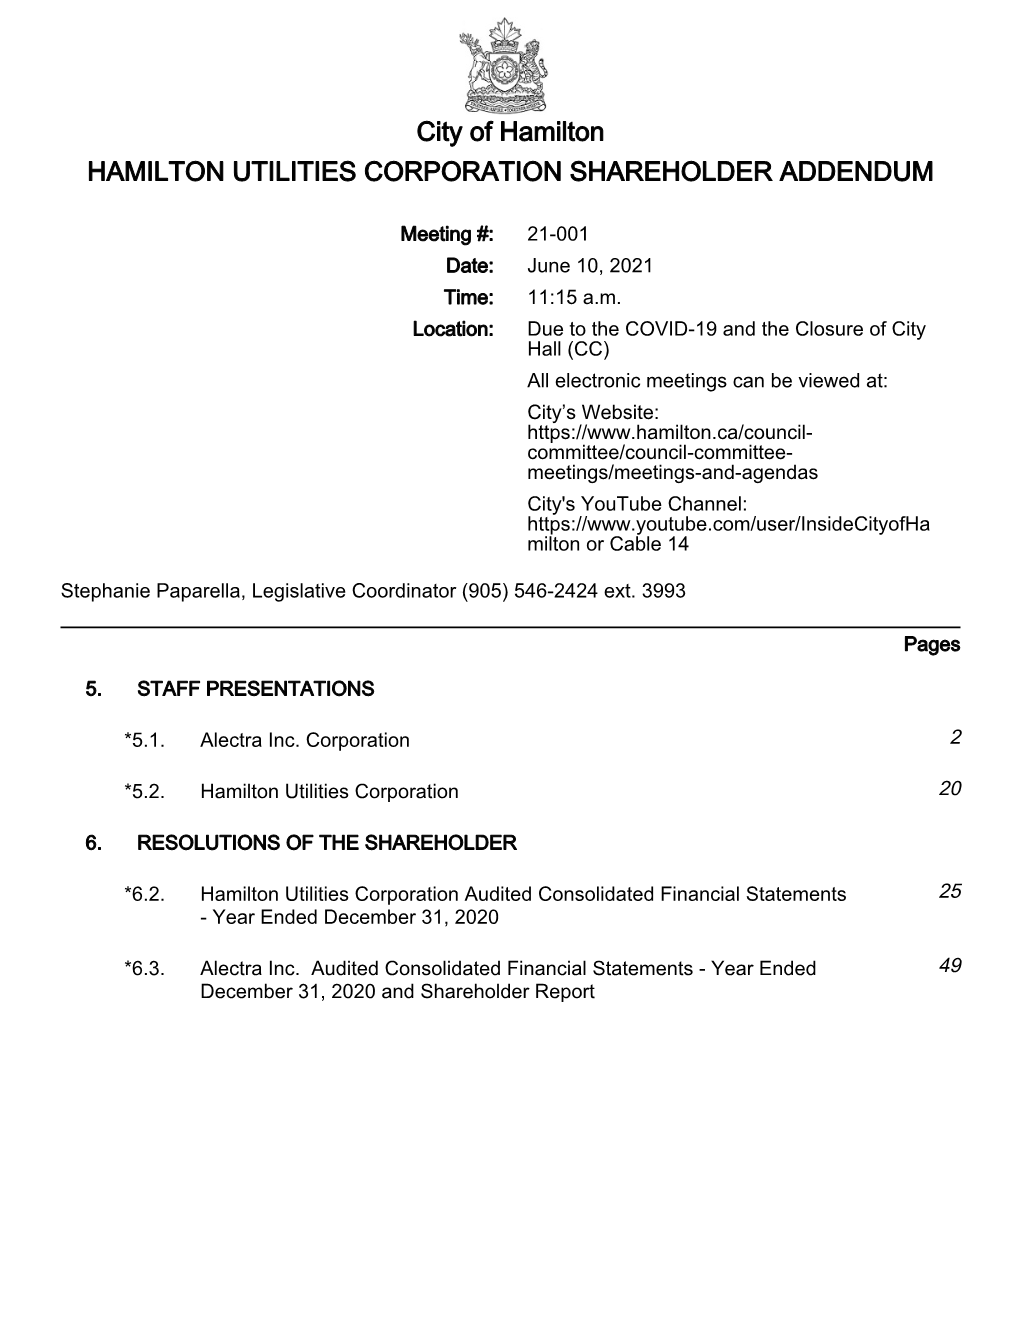 Hamilton Utilities Corporation Shareholder Agenda Package